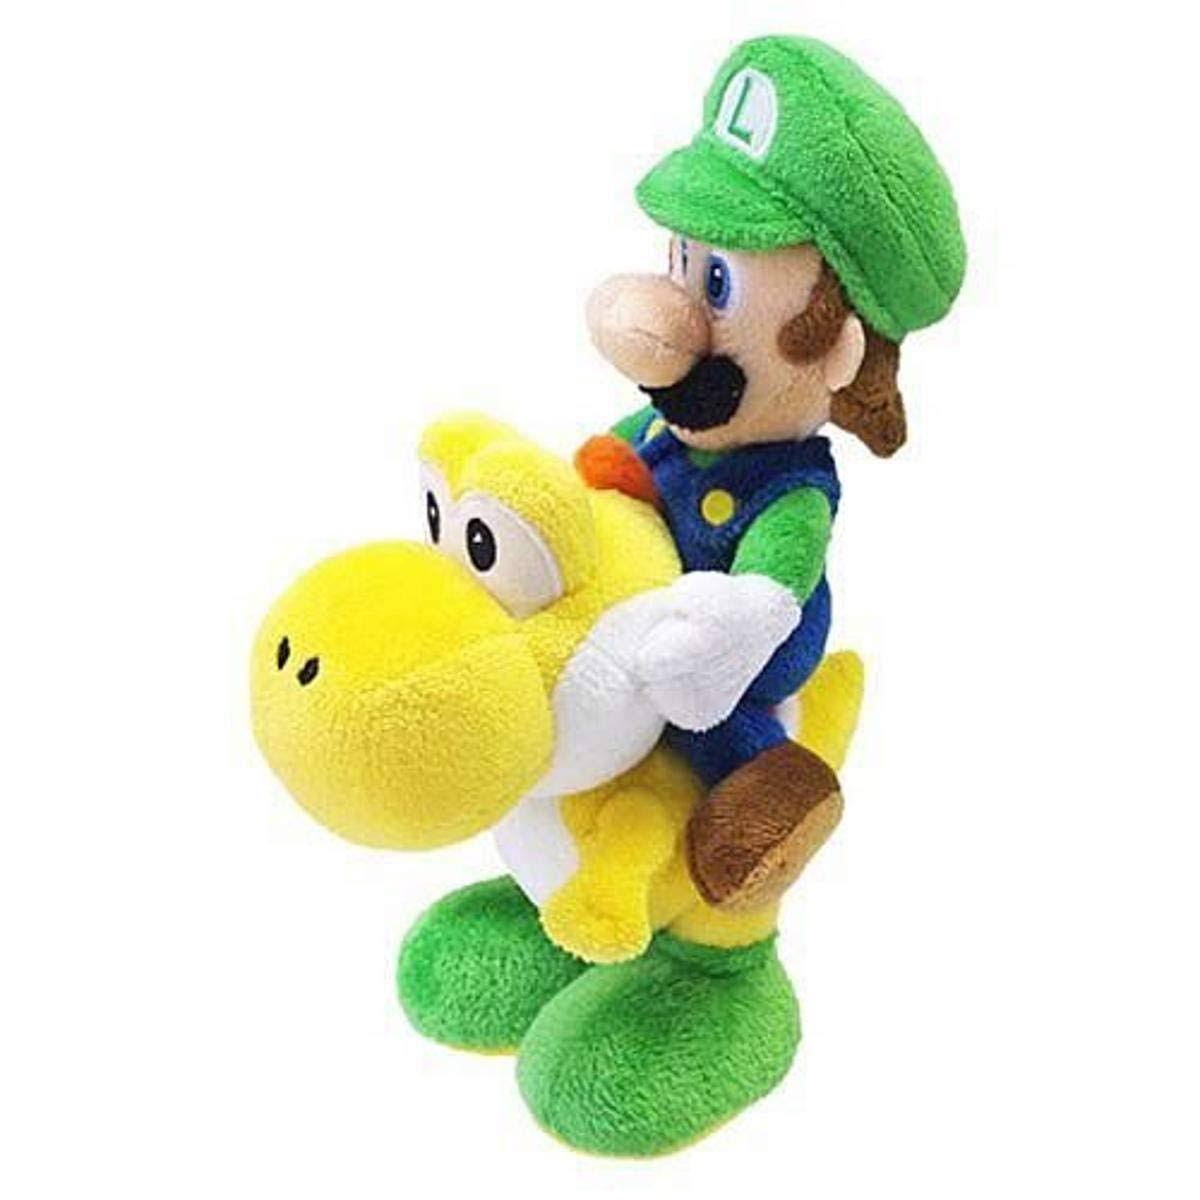 Super Mario Bros Luigi Riding Yoshi Plush Toy - 8"